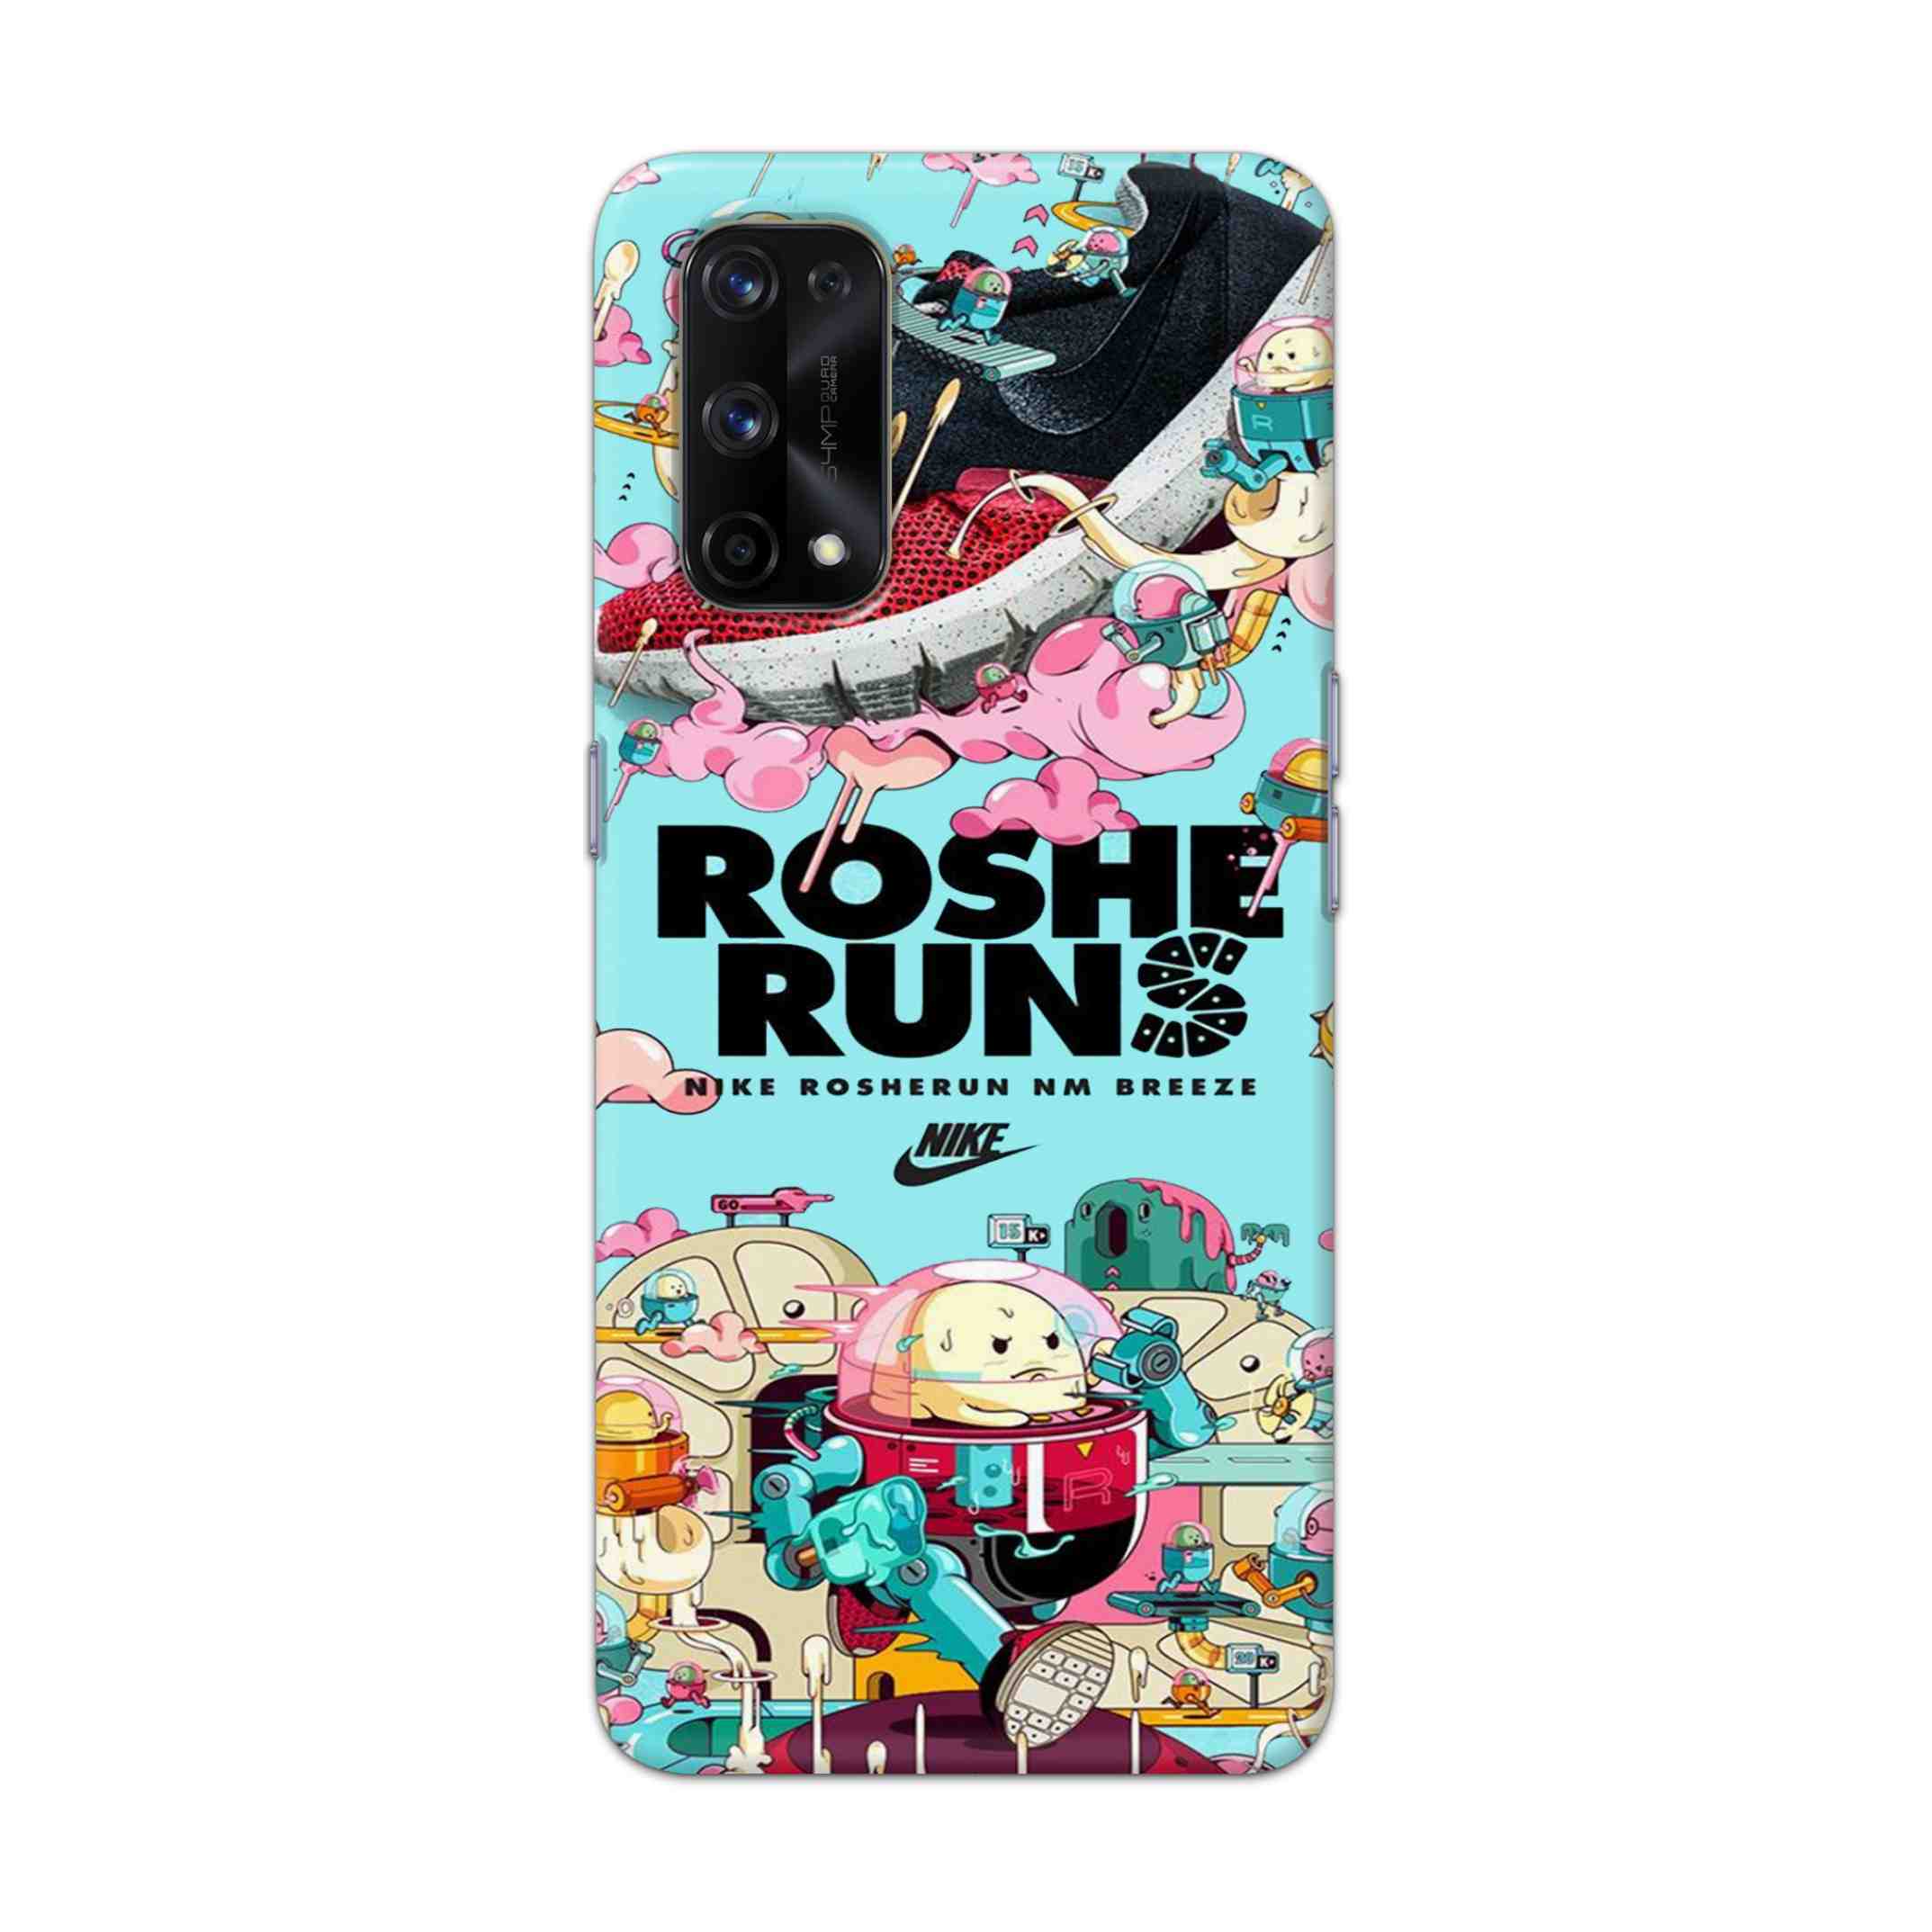 Buy Roshe Runs Hard Back Mobile Phone Case Cover For Realme X7 Pro Online